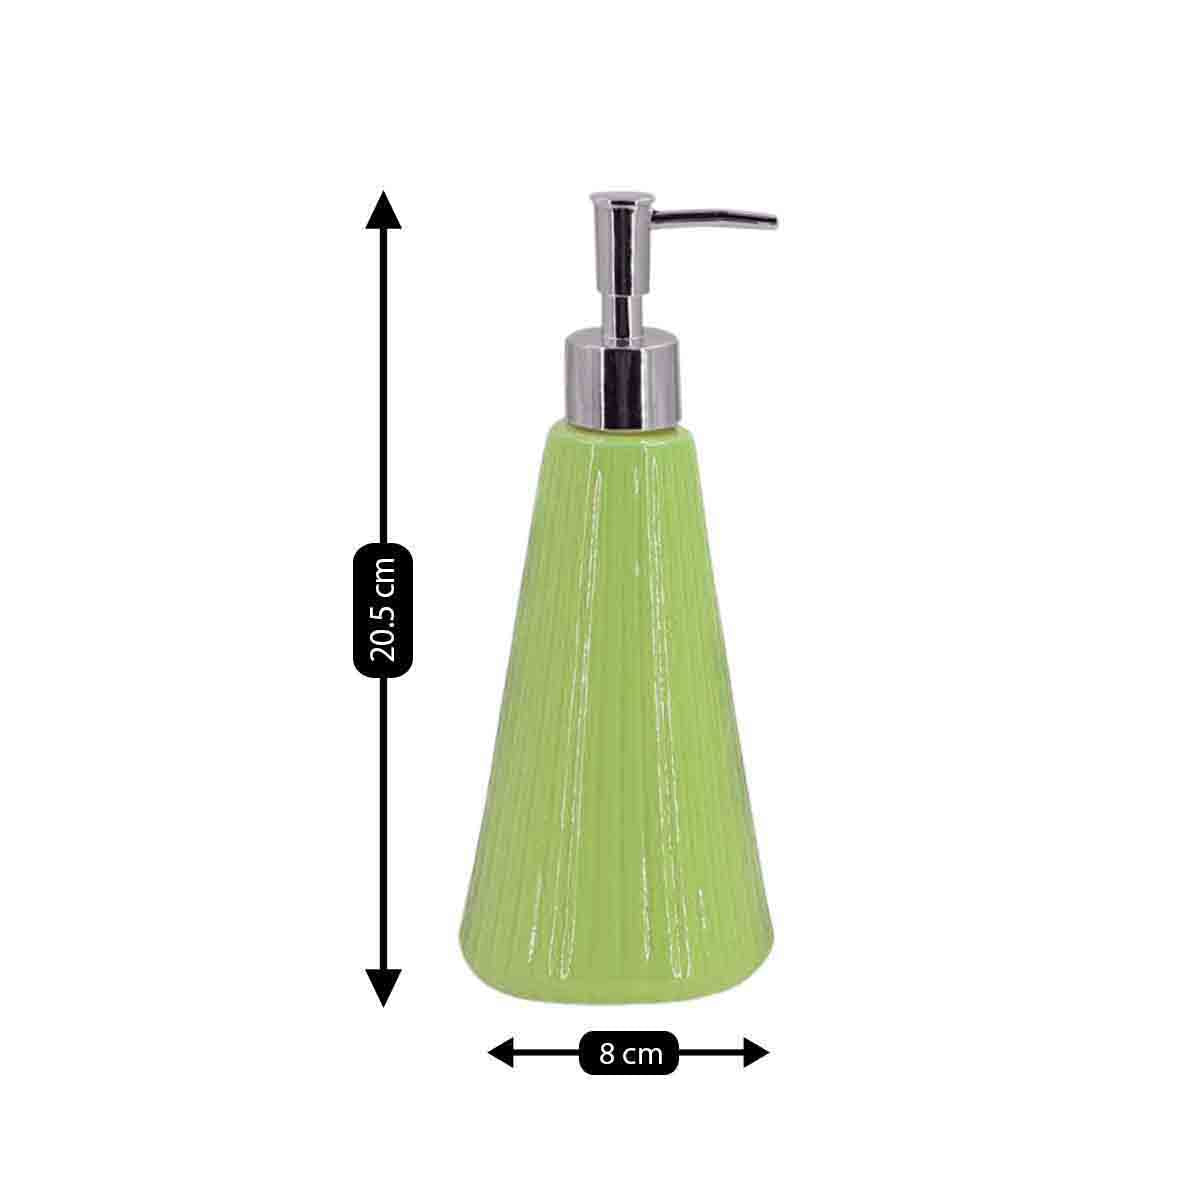 Ceramic Soap Dispenser Pump for Bathroom for Bath Gel, Lotion, Shampoo (6040)